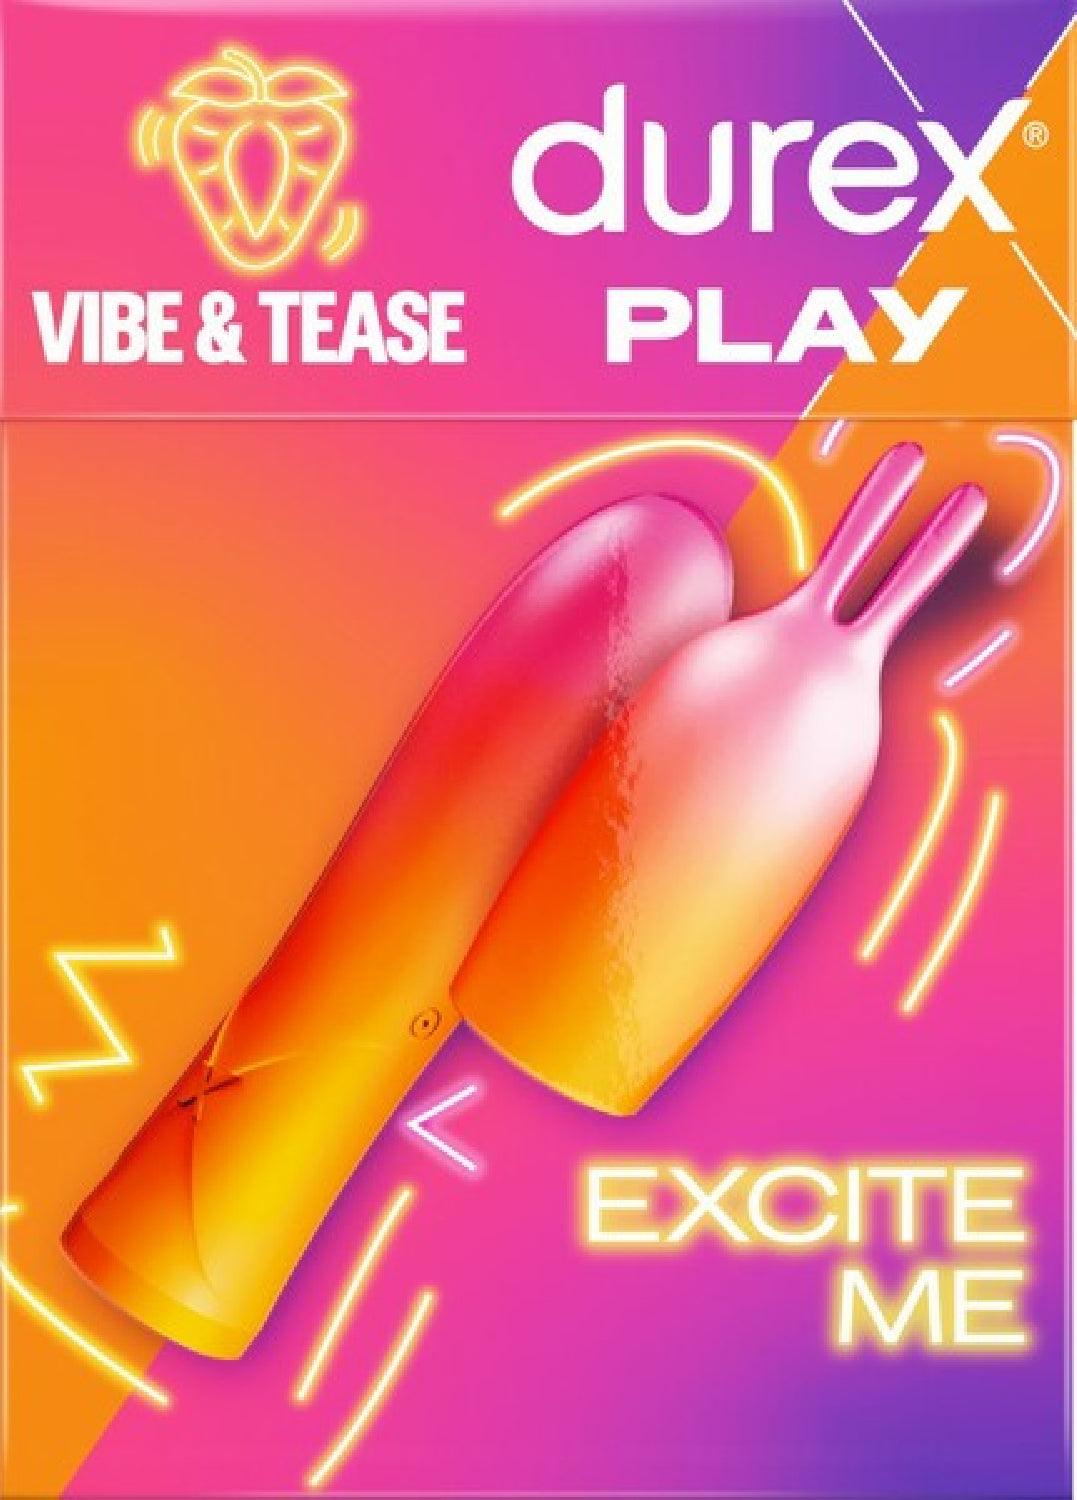 Play Vibe & Tease 2 In 1 Vibrator & Teaser Tip - Take A Peek